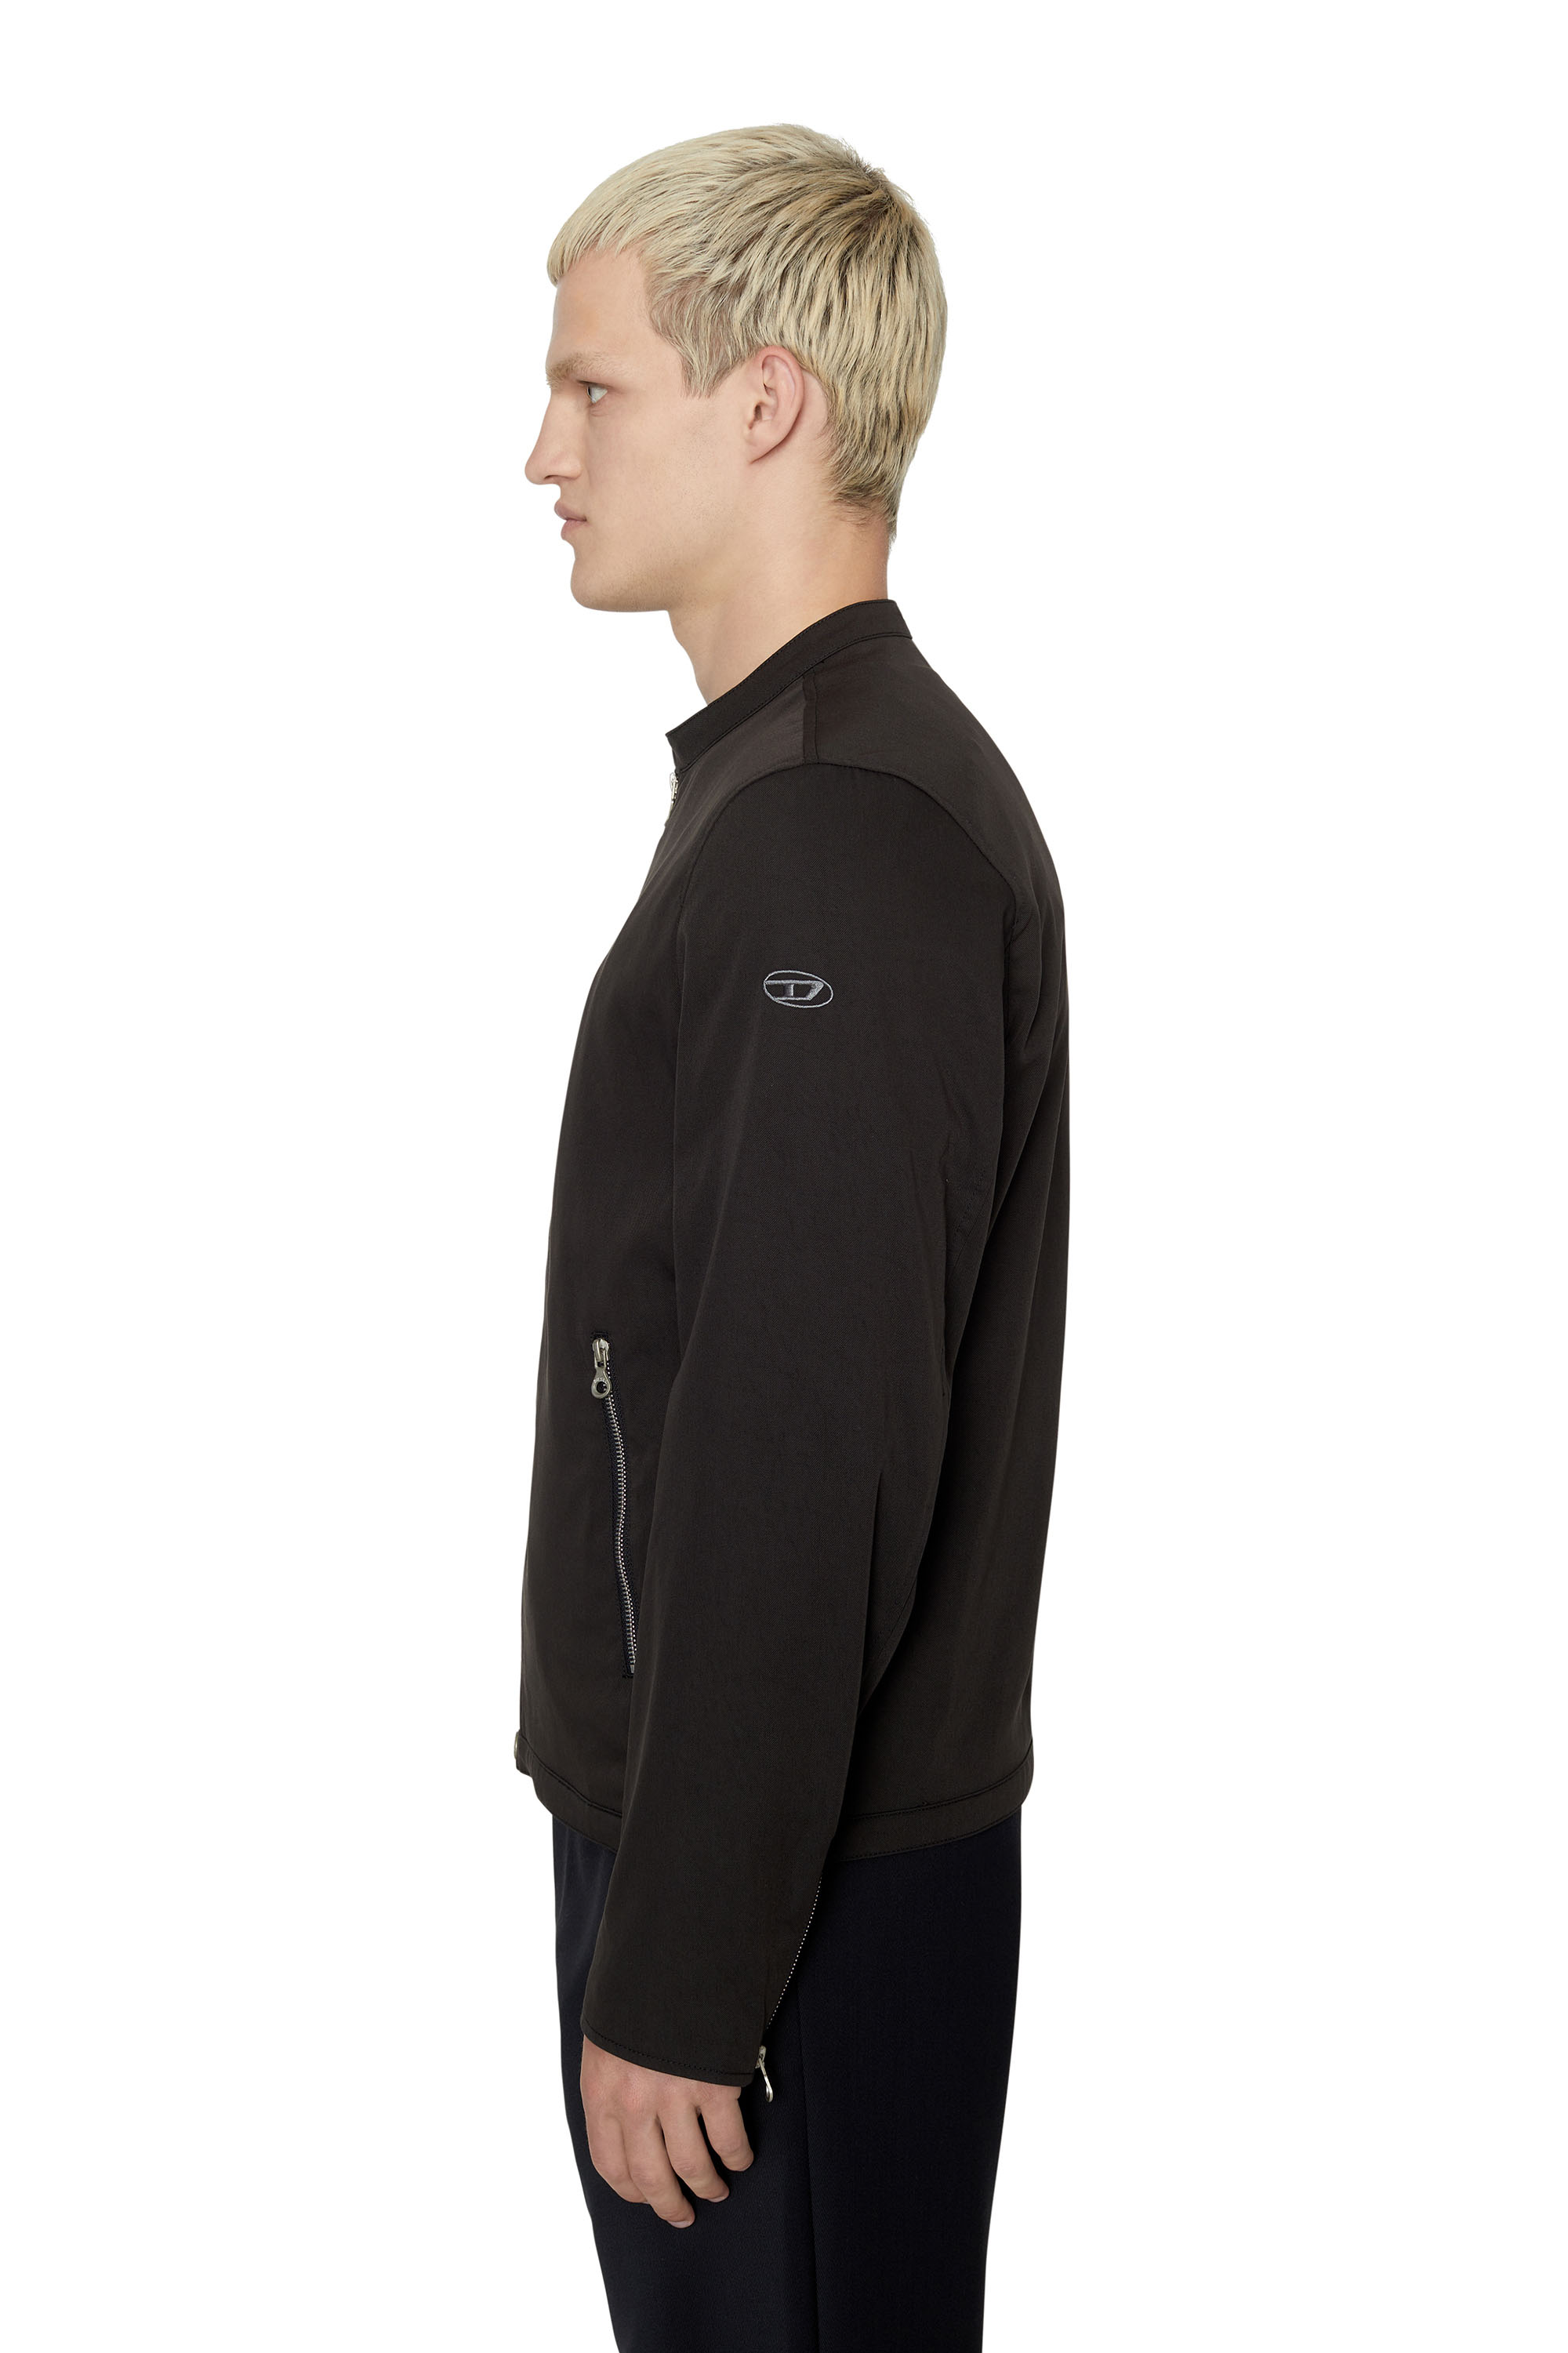 Diesel - J-GLORY-NW, Man Biker jacket in cotton-touch nylon in Black - Image 6